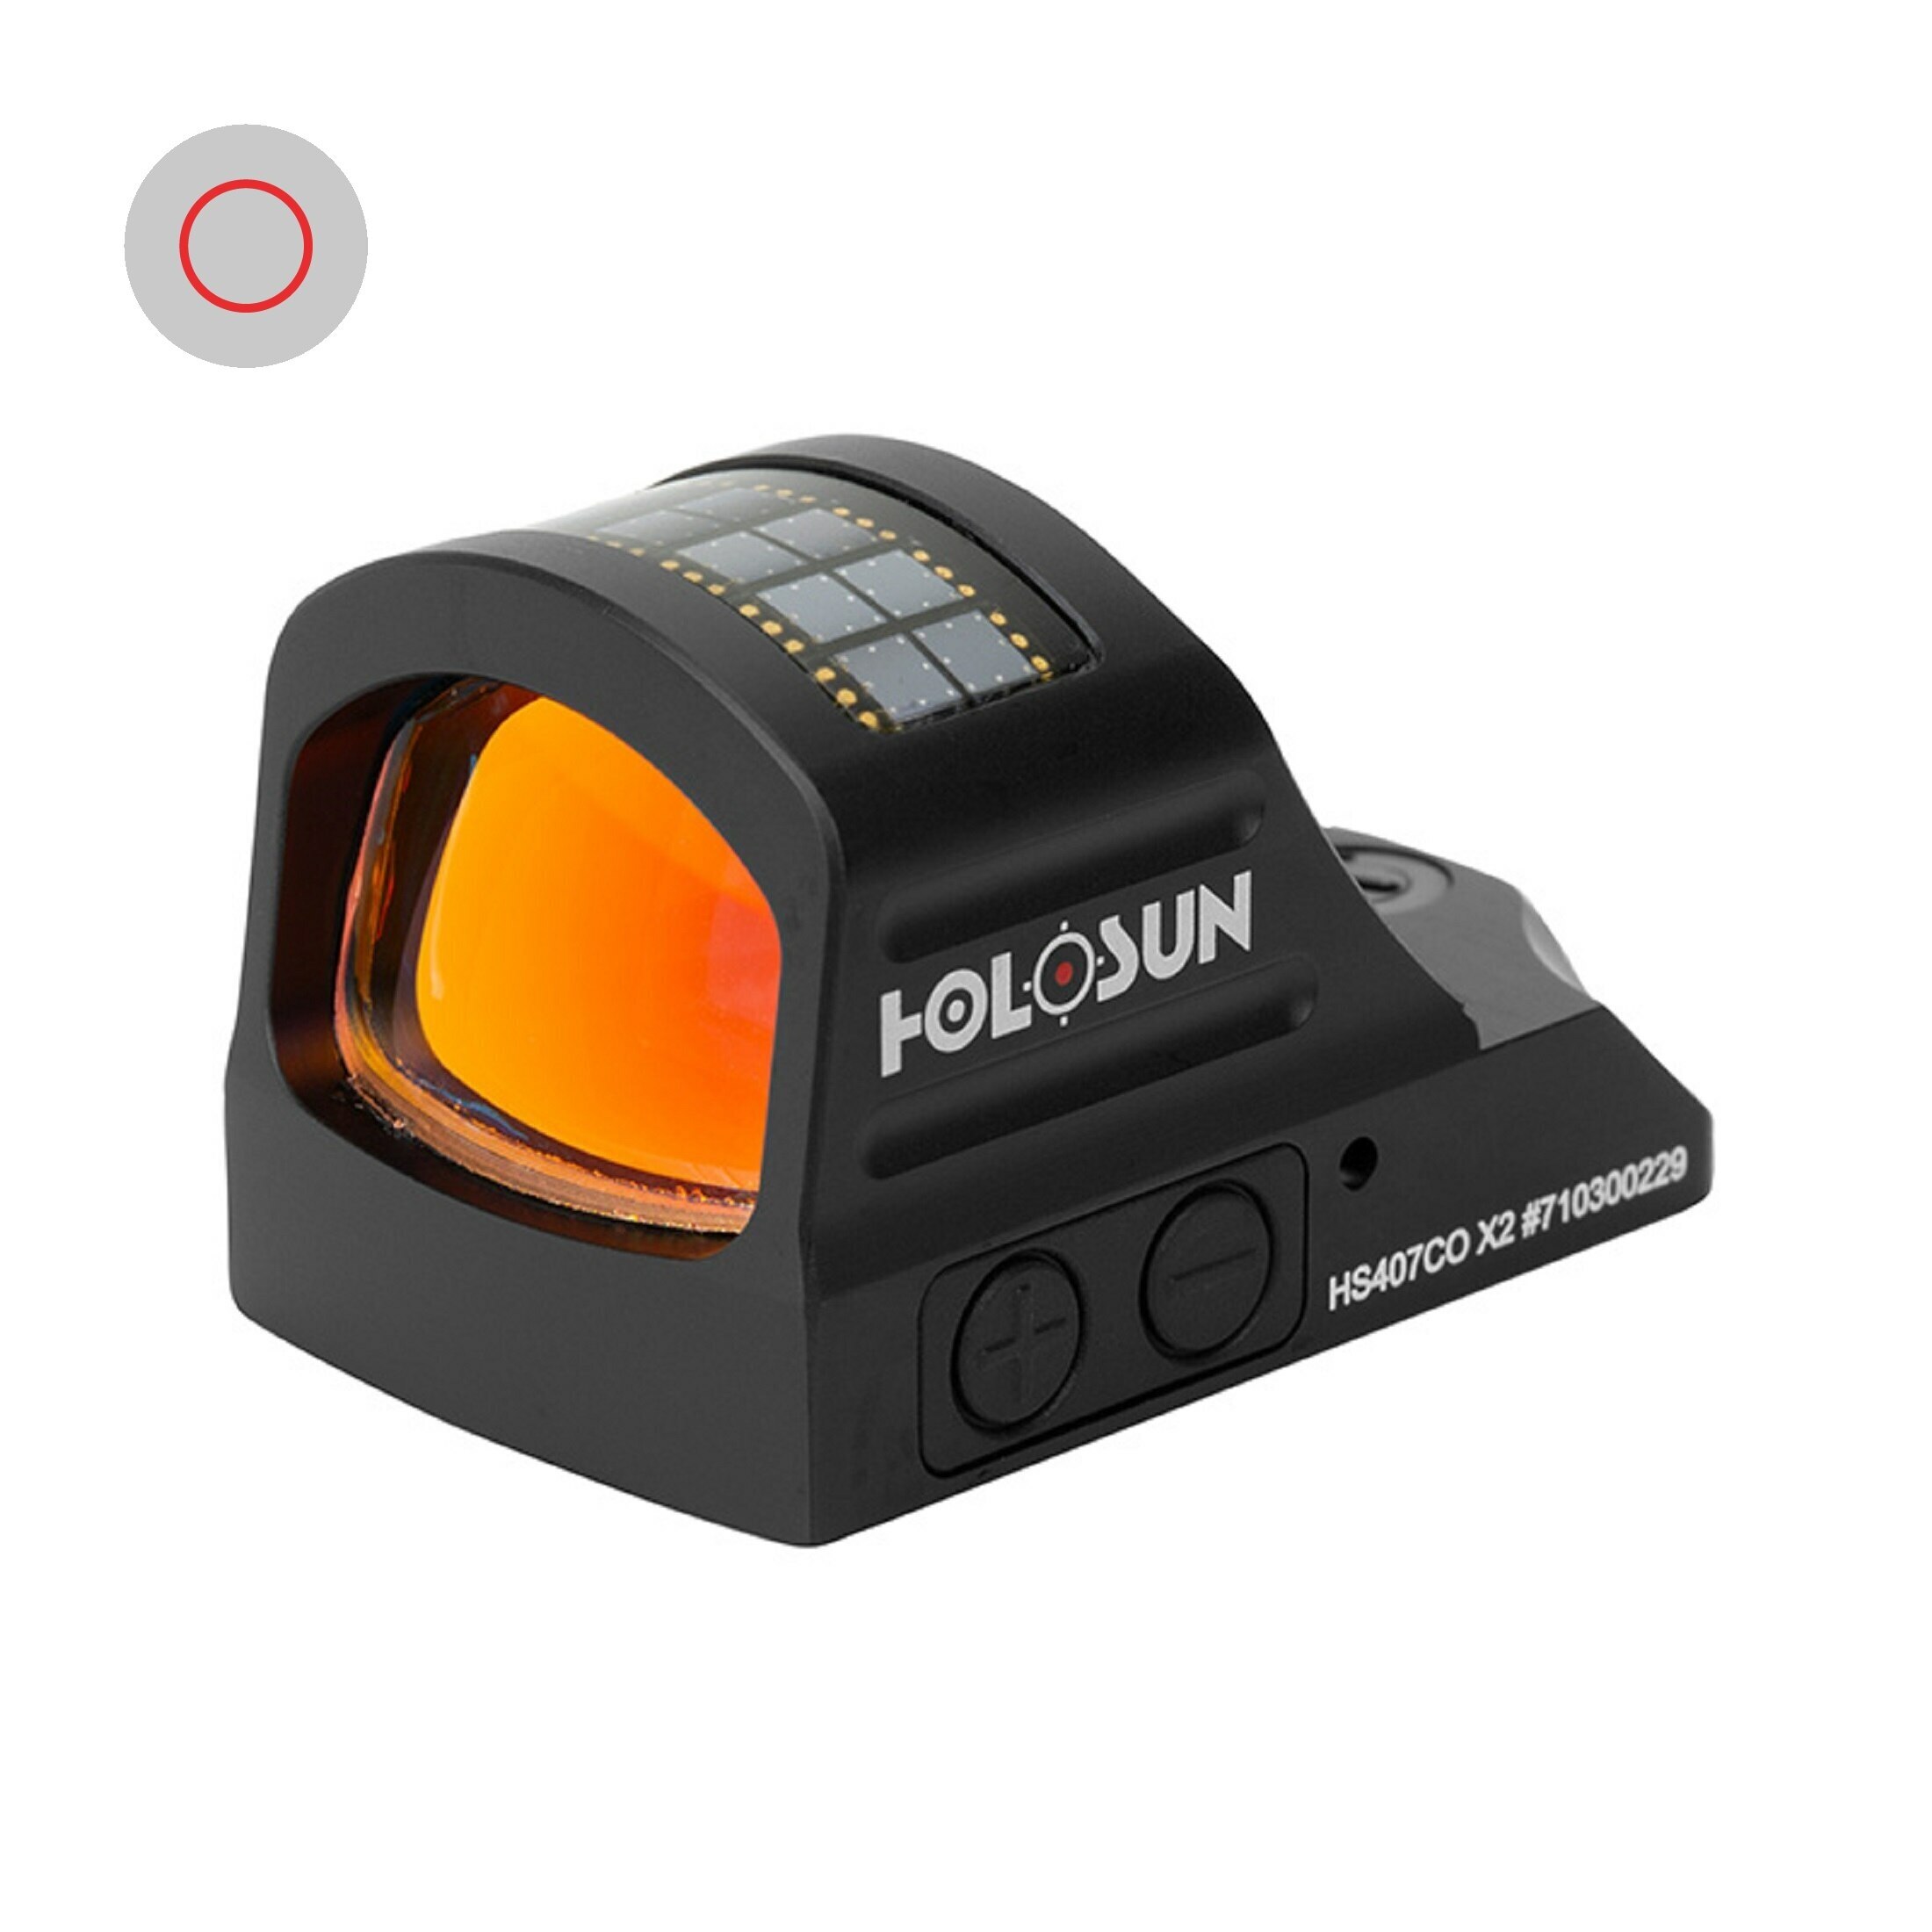 Holosun HS407CO-X2 open reflex red dot sight 8MOA circle reticle solar cell, black